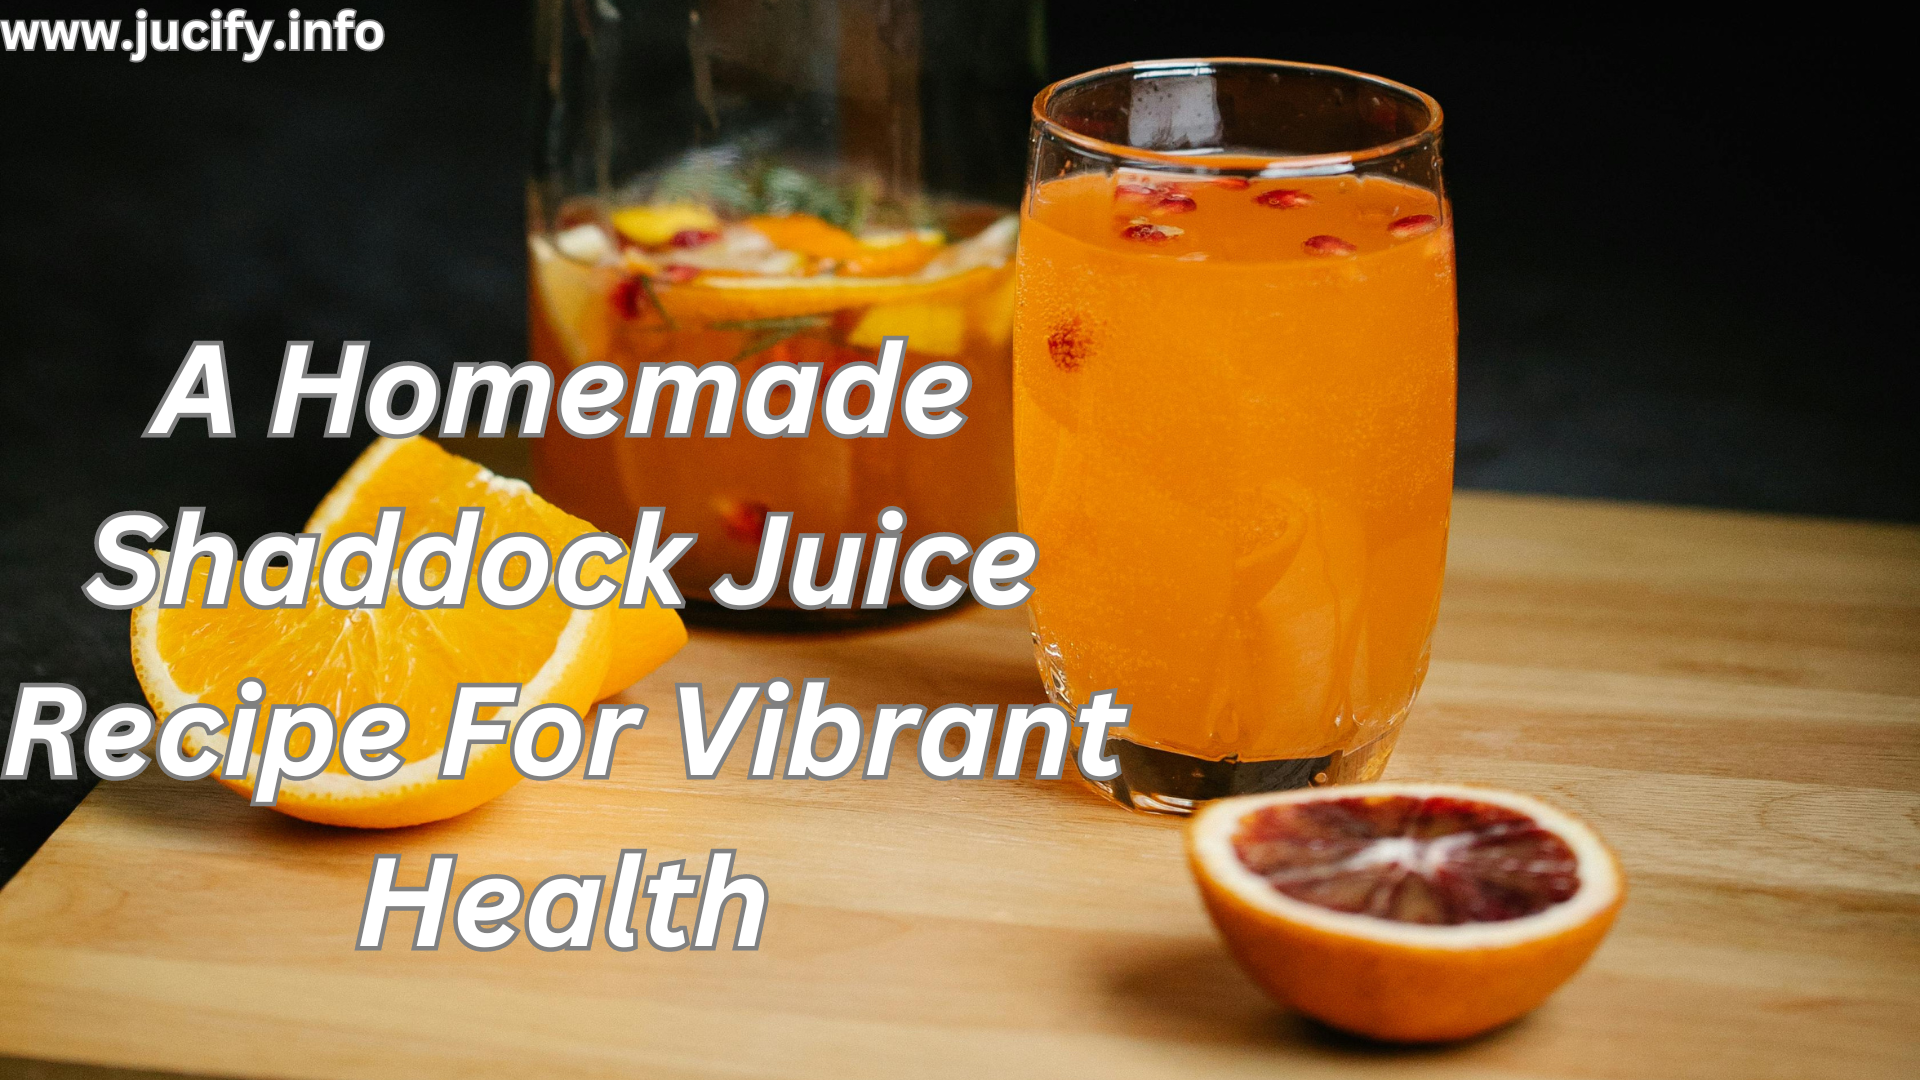 A Homemade Shaddock Juice Recipe For Vibrant Health